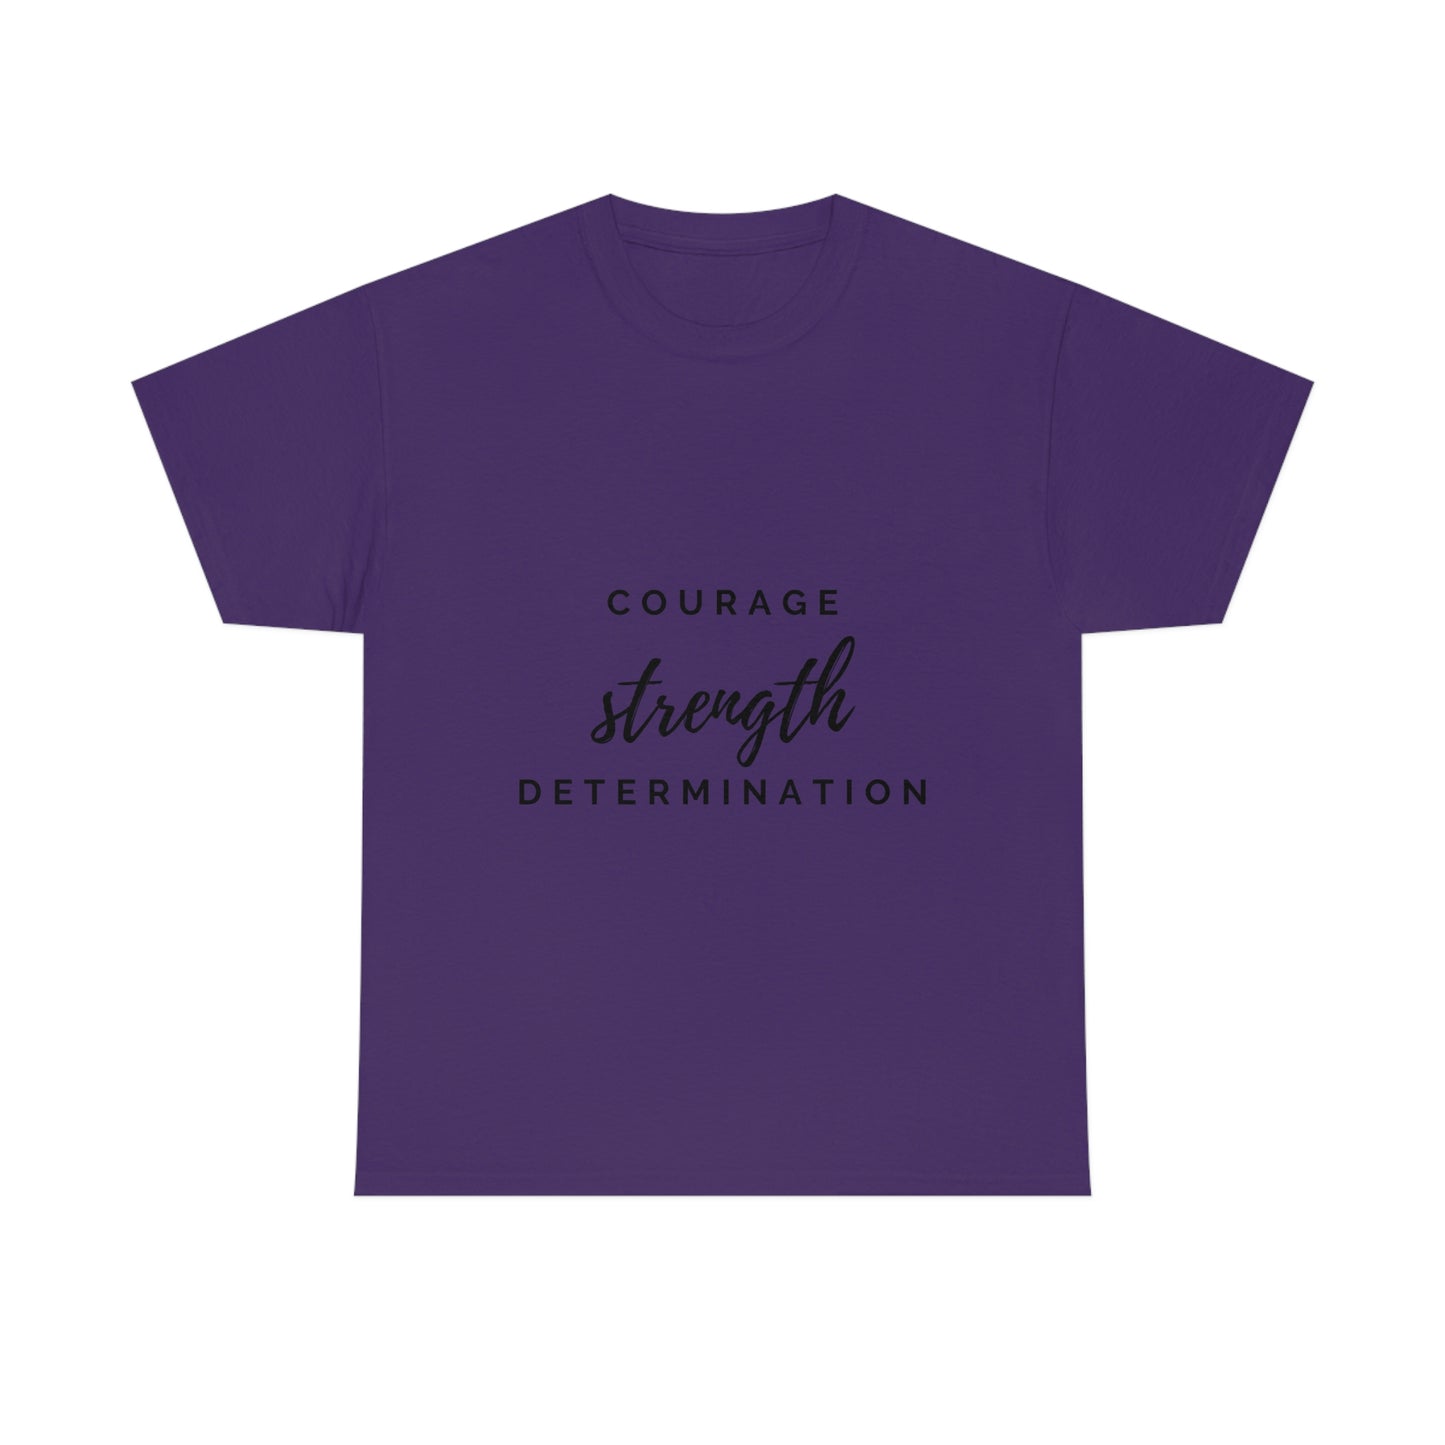 Courage, Strength, Determination T-shirt